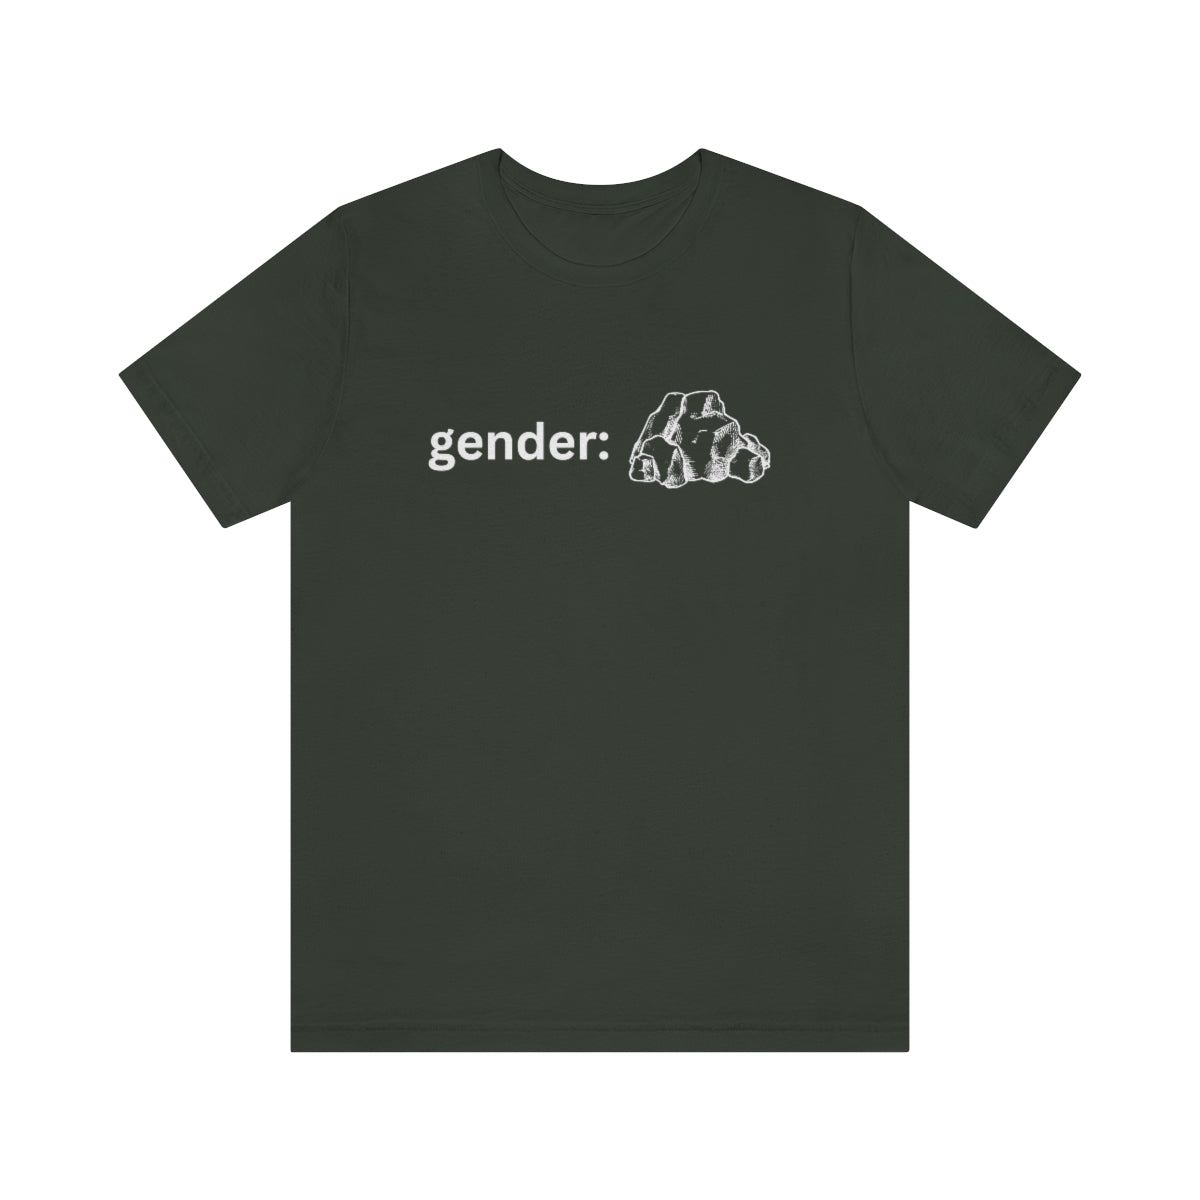 "rocks don't have gender, just like some people" Shirt